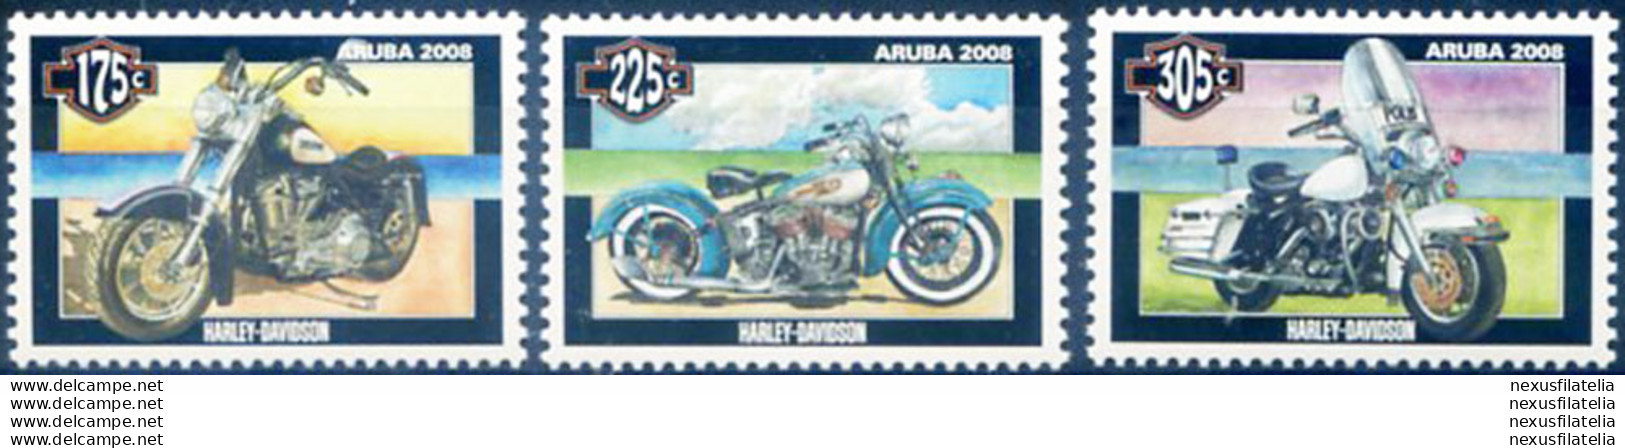 Motociclette 2008. - Niederländische Antillen, Curaçao, Aruba